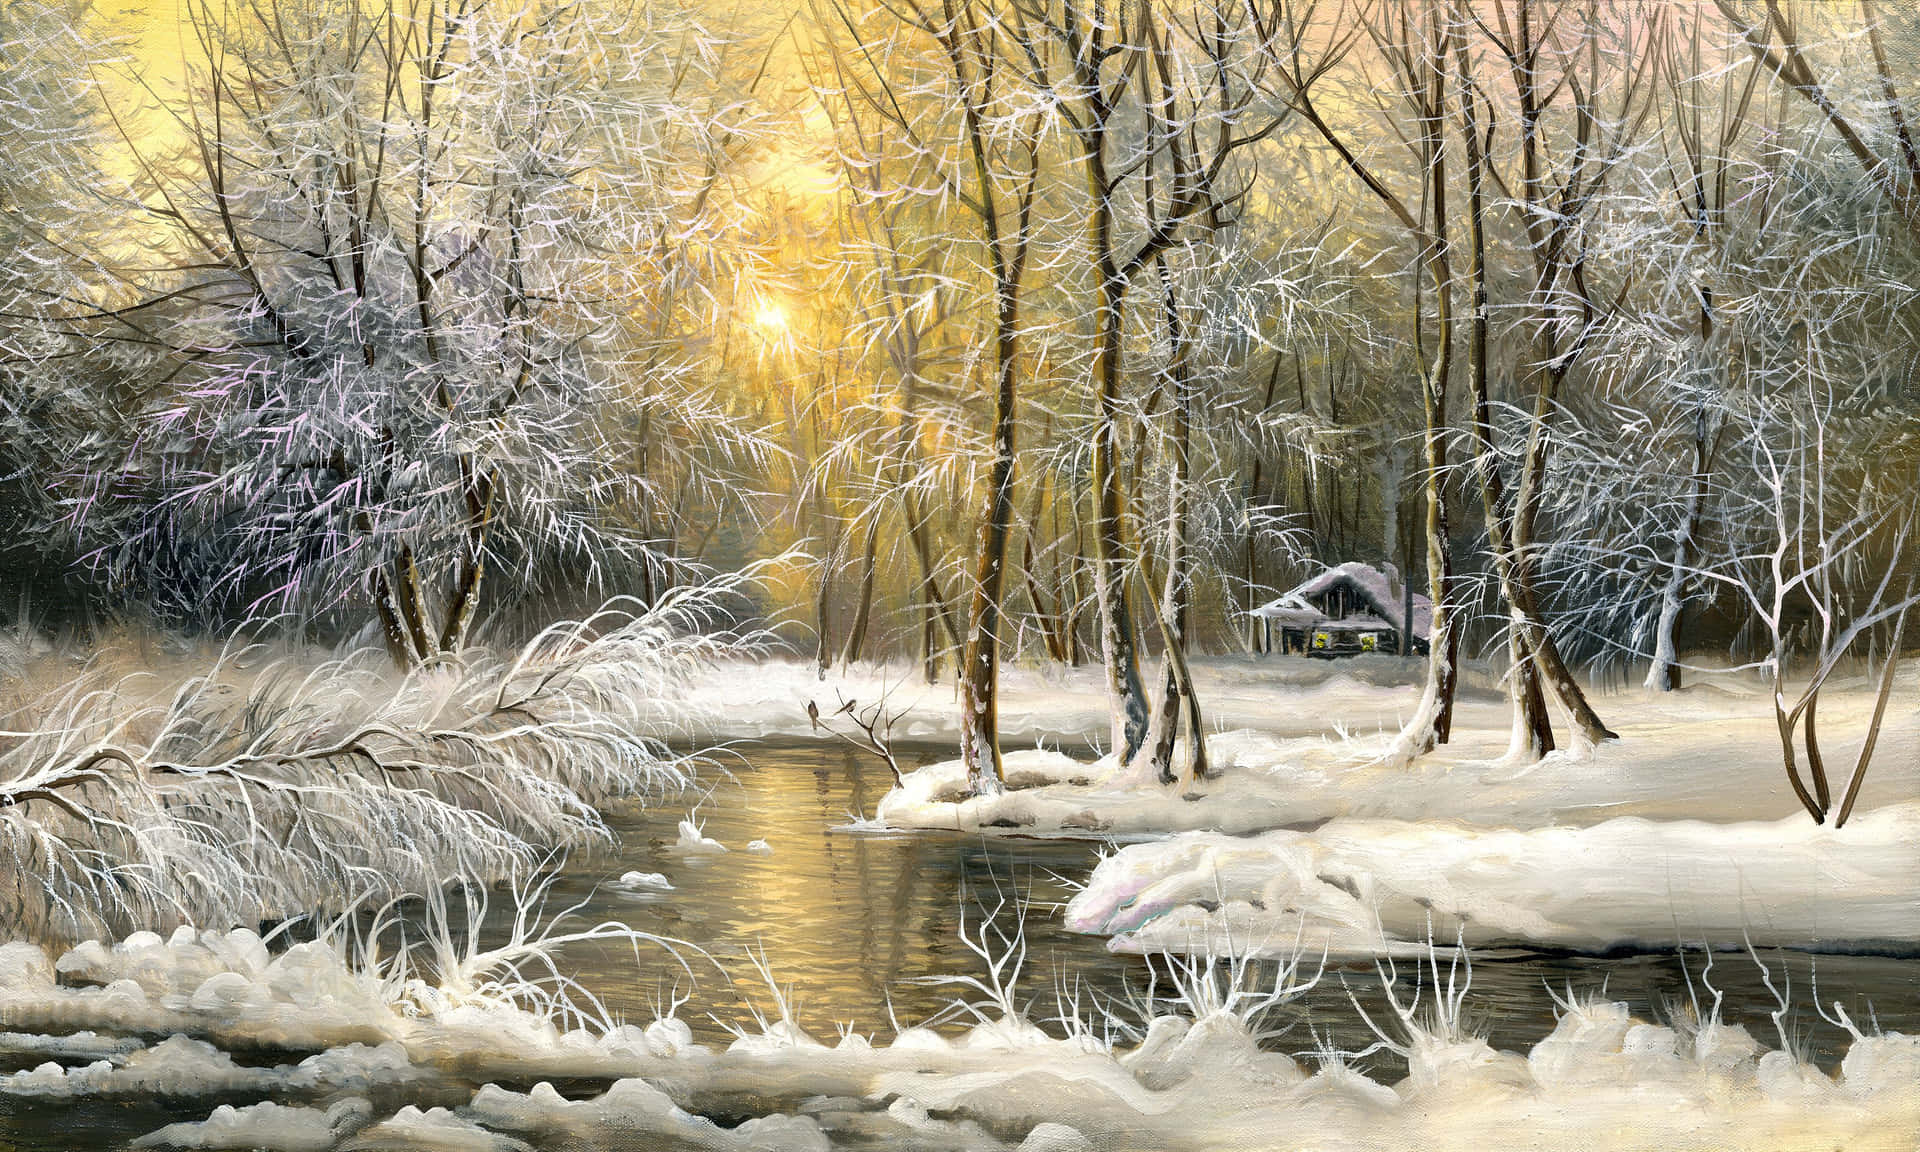 Download Captivating Winter Wonderland Painting Wallpaper | Wallpapers.com